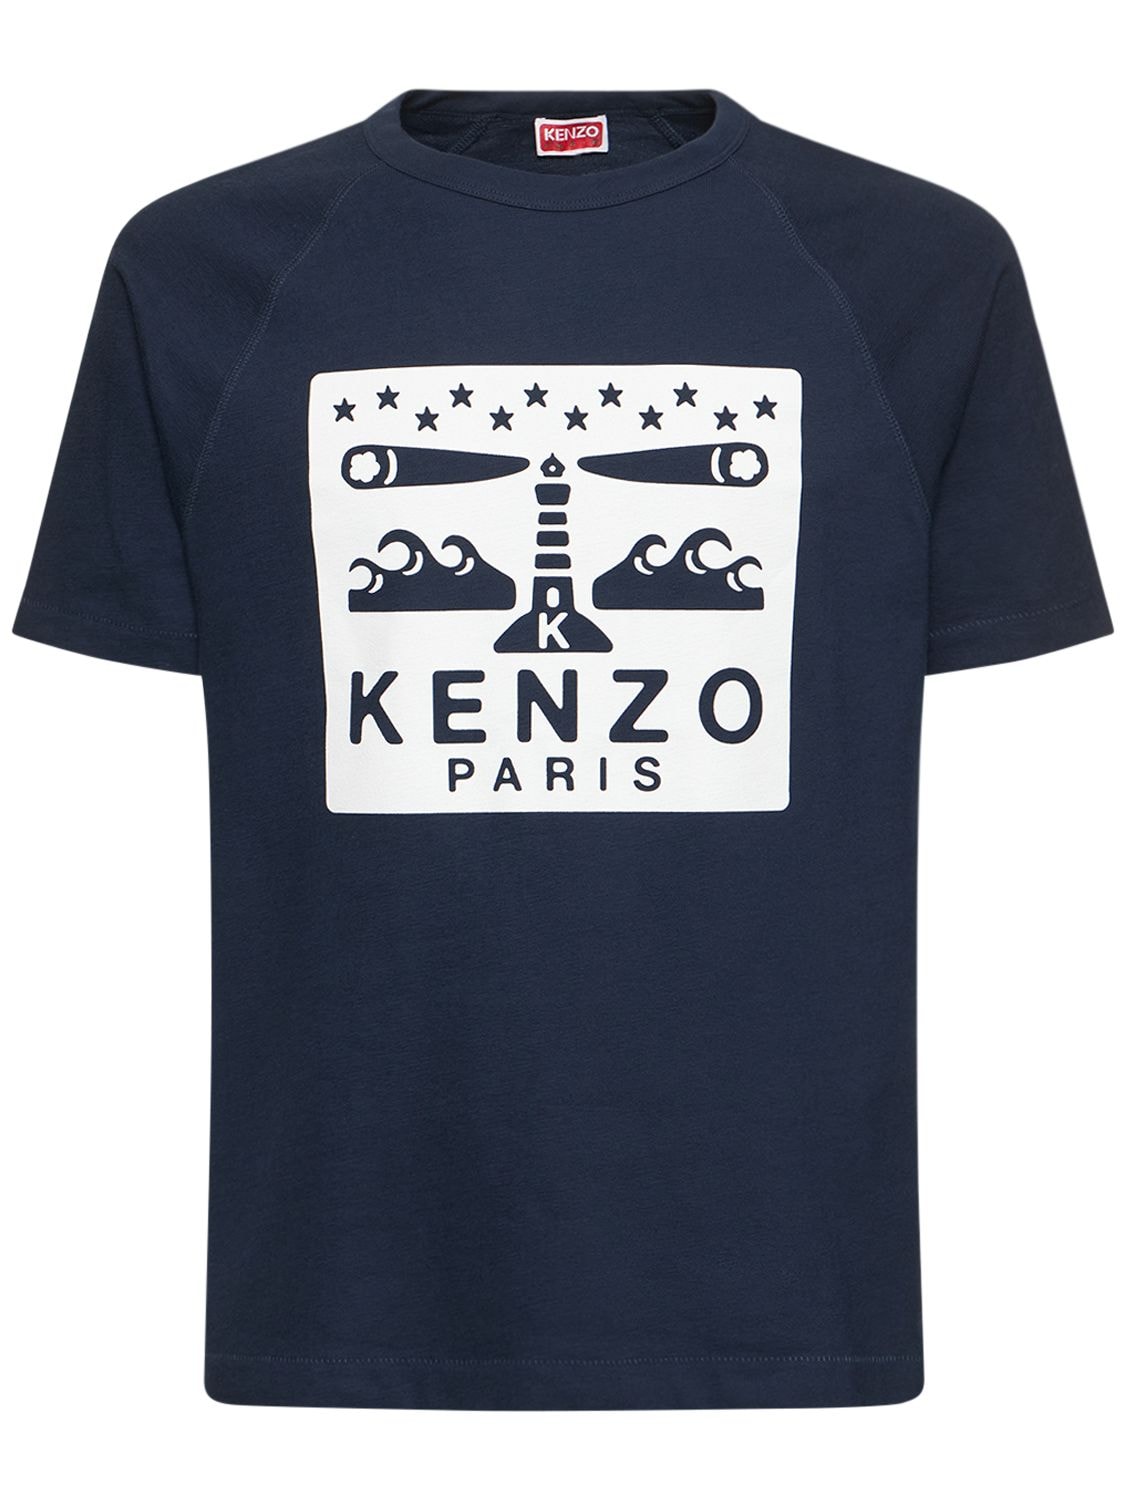 KENZO PARIS Lighthouse Slim Jersey T-shirt